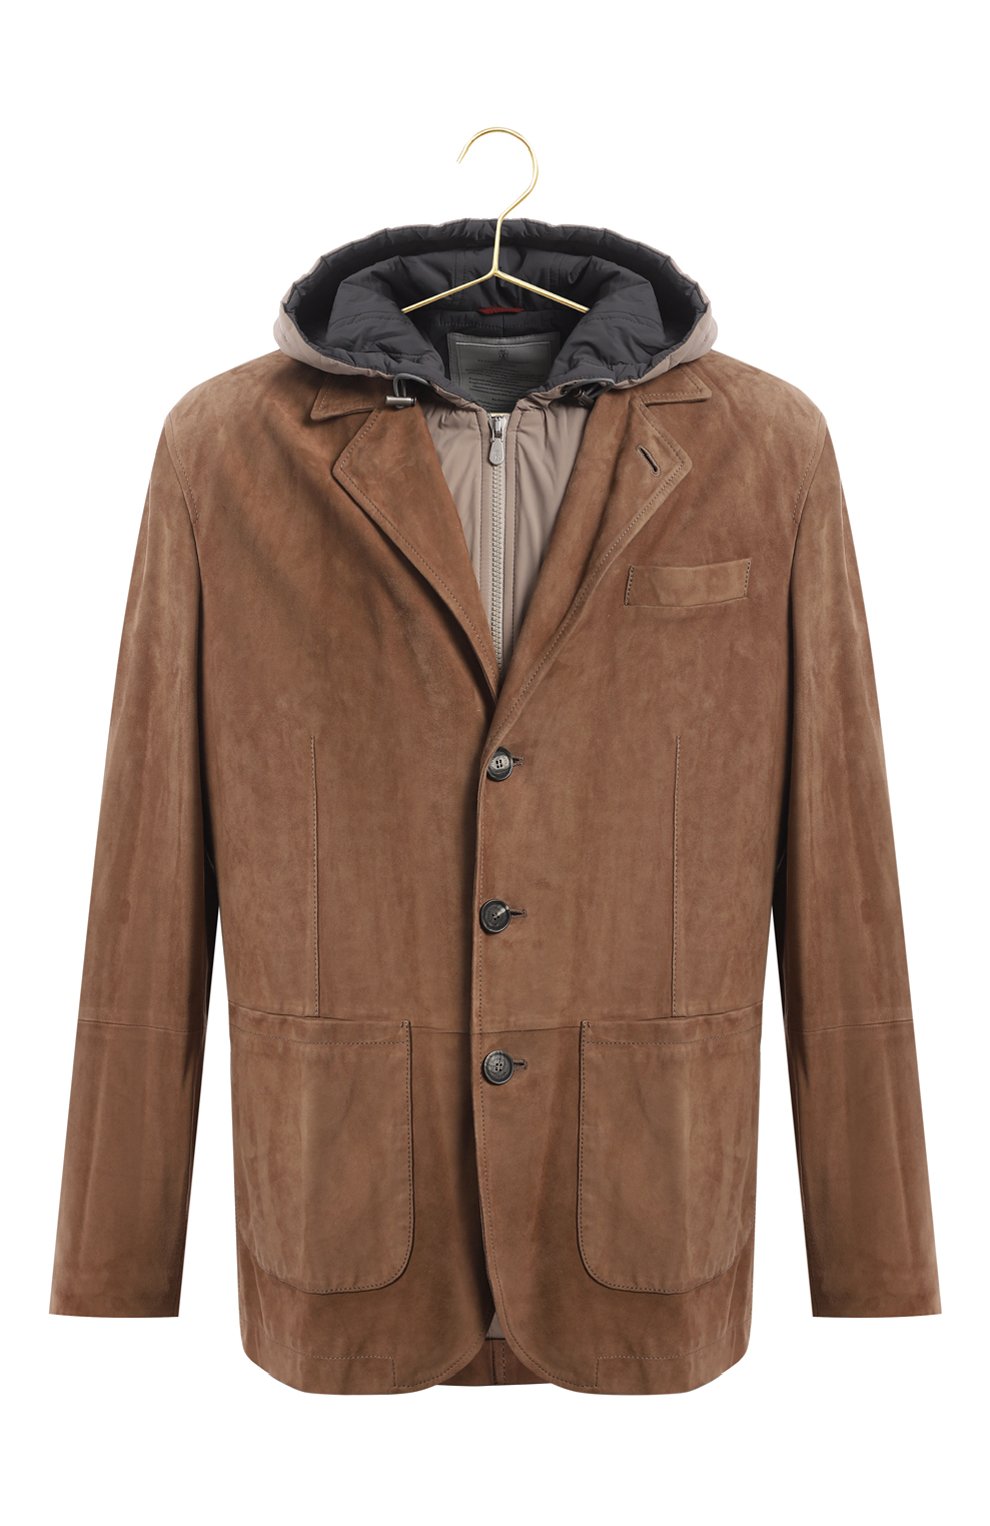 Комплект из куртки и жилета | Brunello Cucinelli | Коричневый - 1